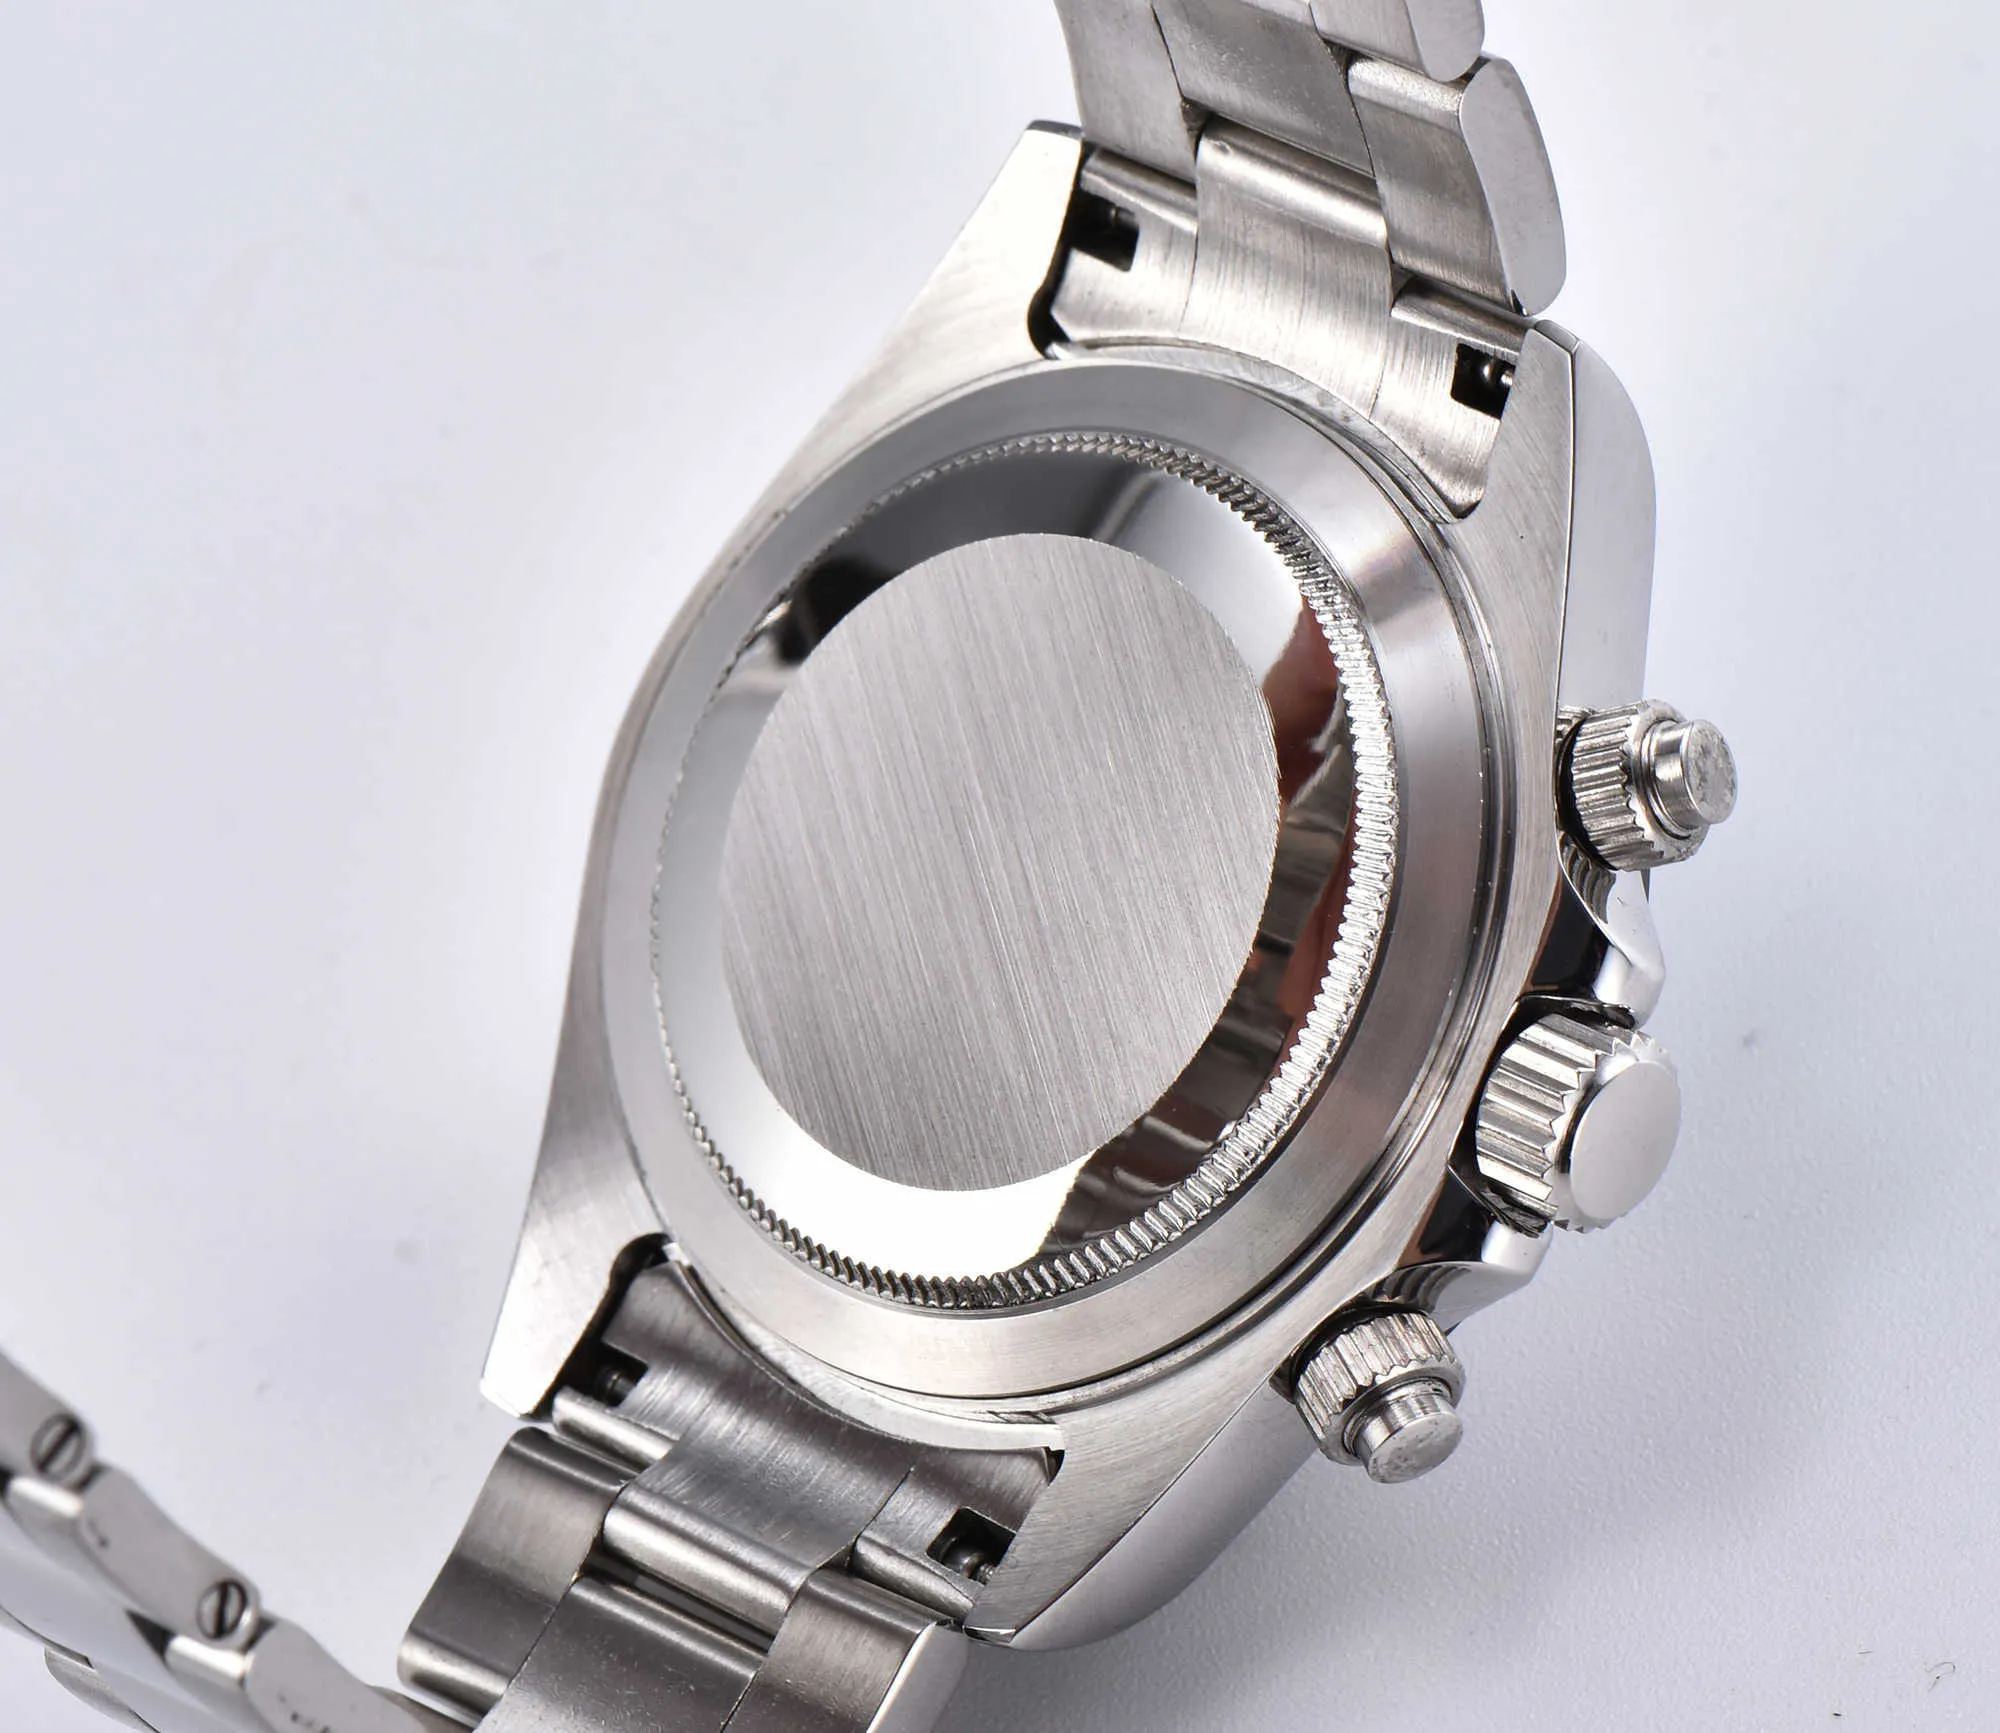 Japans chronograaf horloge VK63 quartz uurwerk 39MM steriele wijzerplaat Lichtgevende wijzers saffier glasvezel kast armband TO637 H1012211G